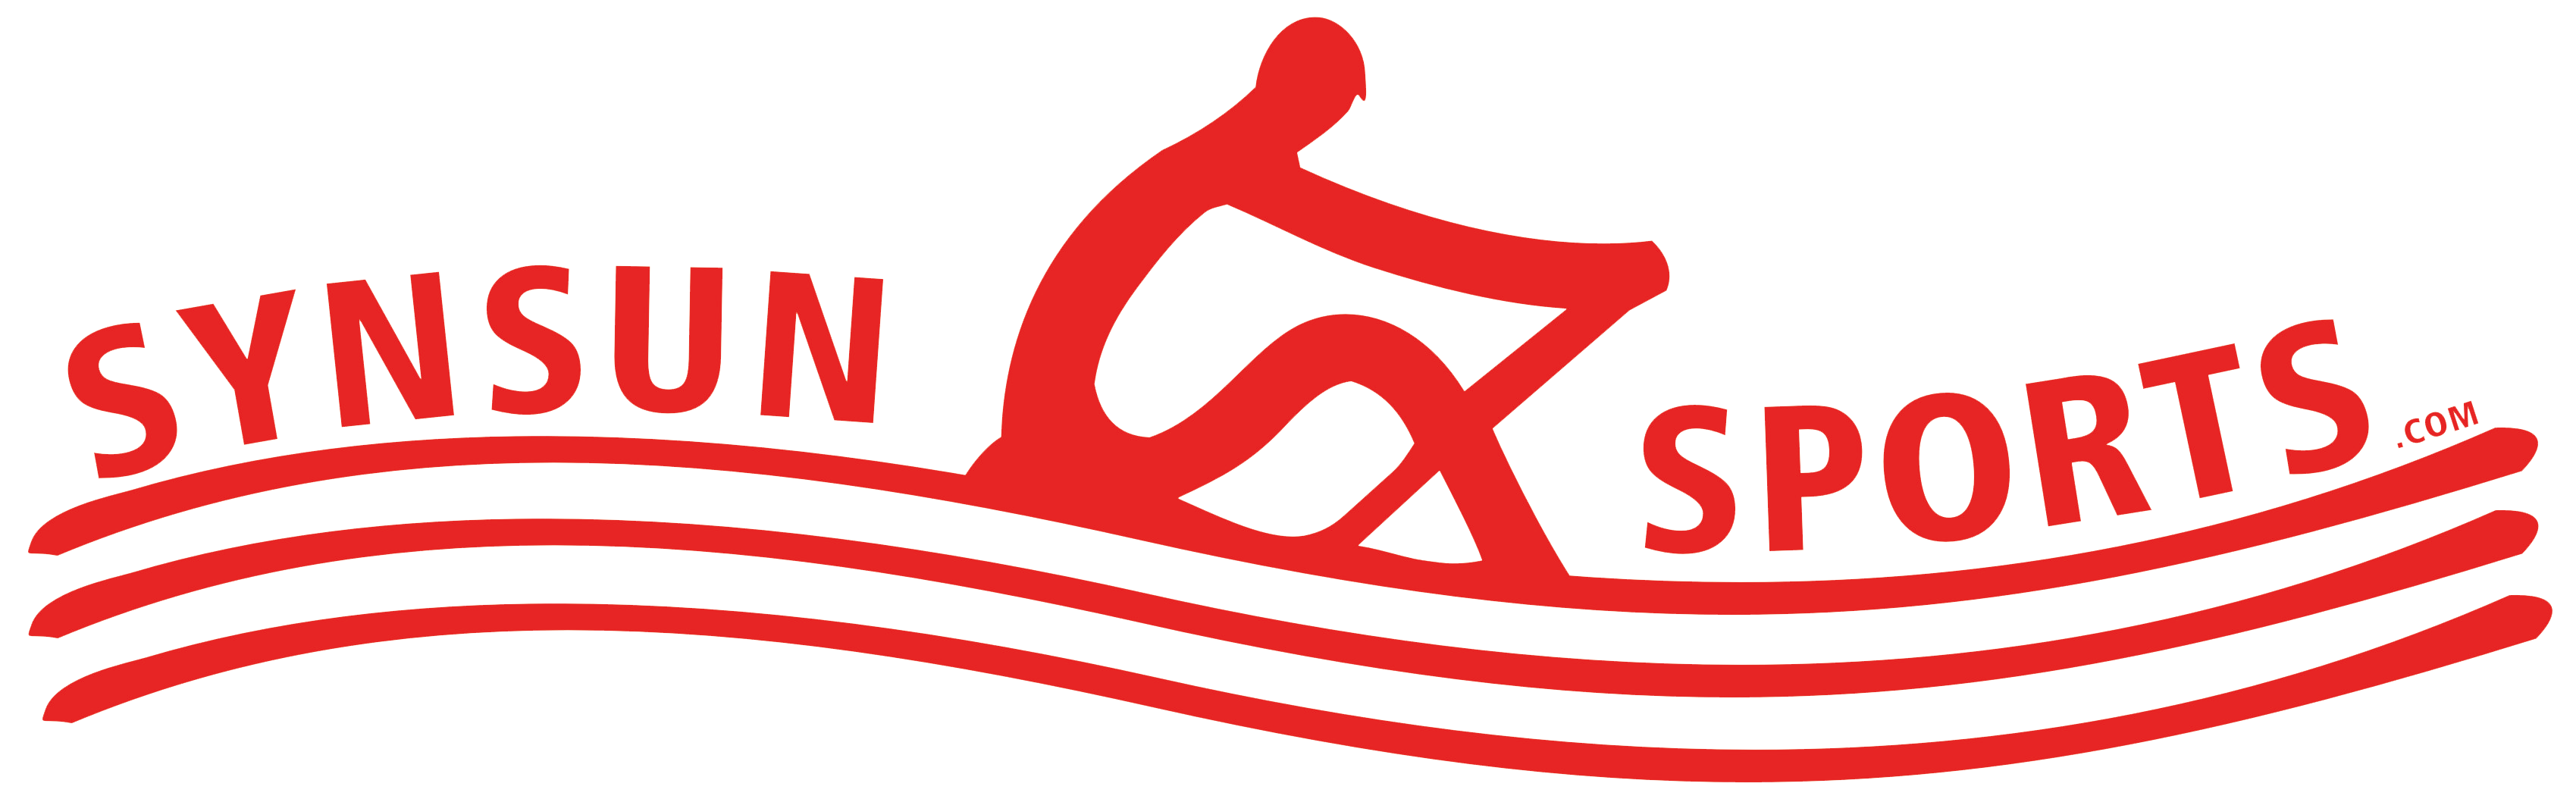 synsunsports-logo-2